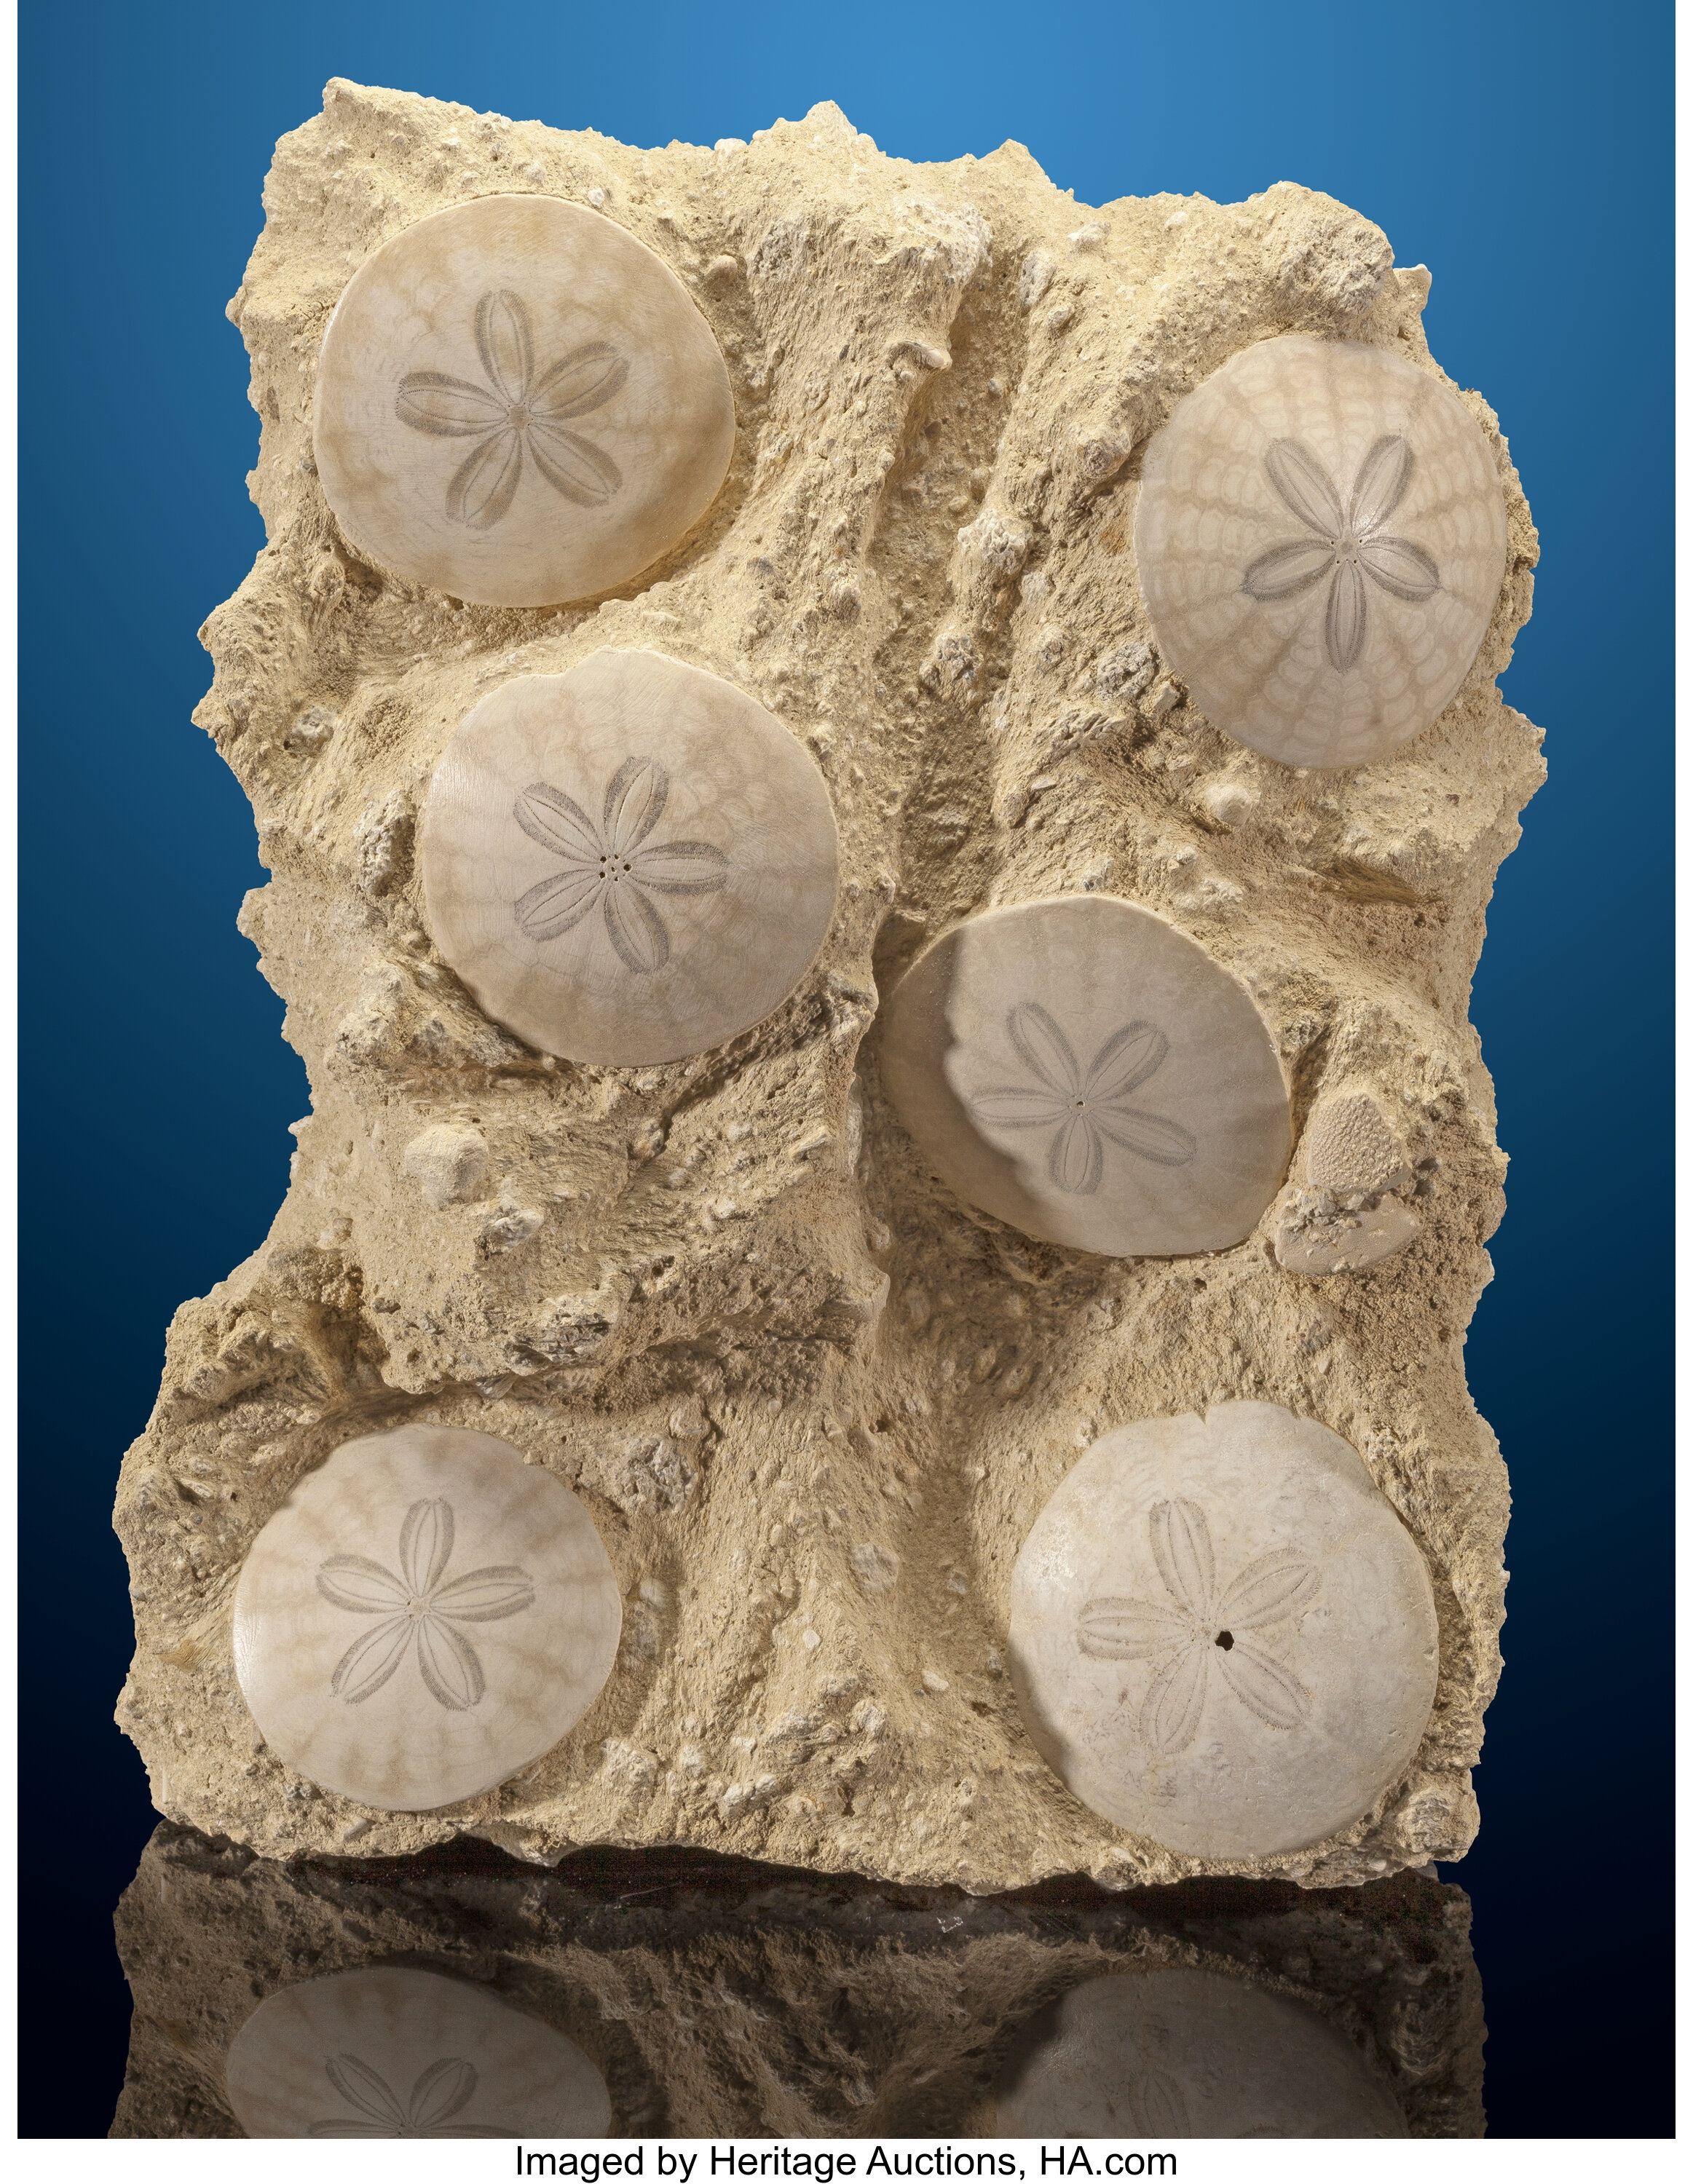 Fossil Sand Dollars - Xsm